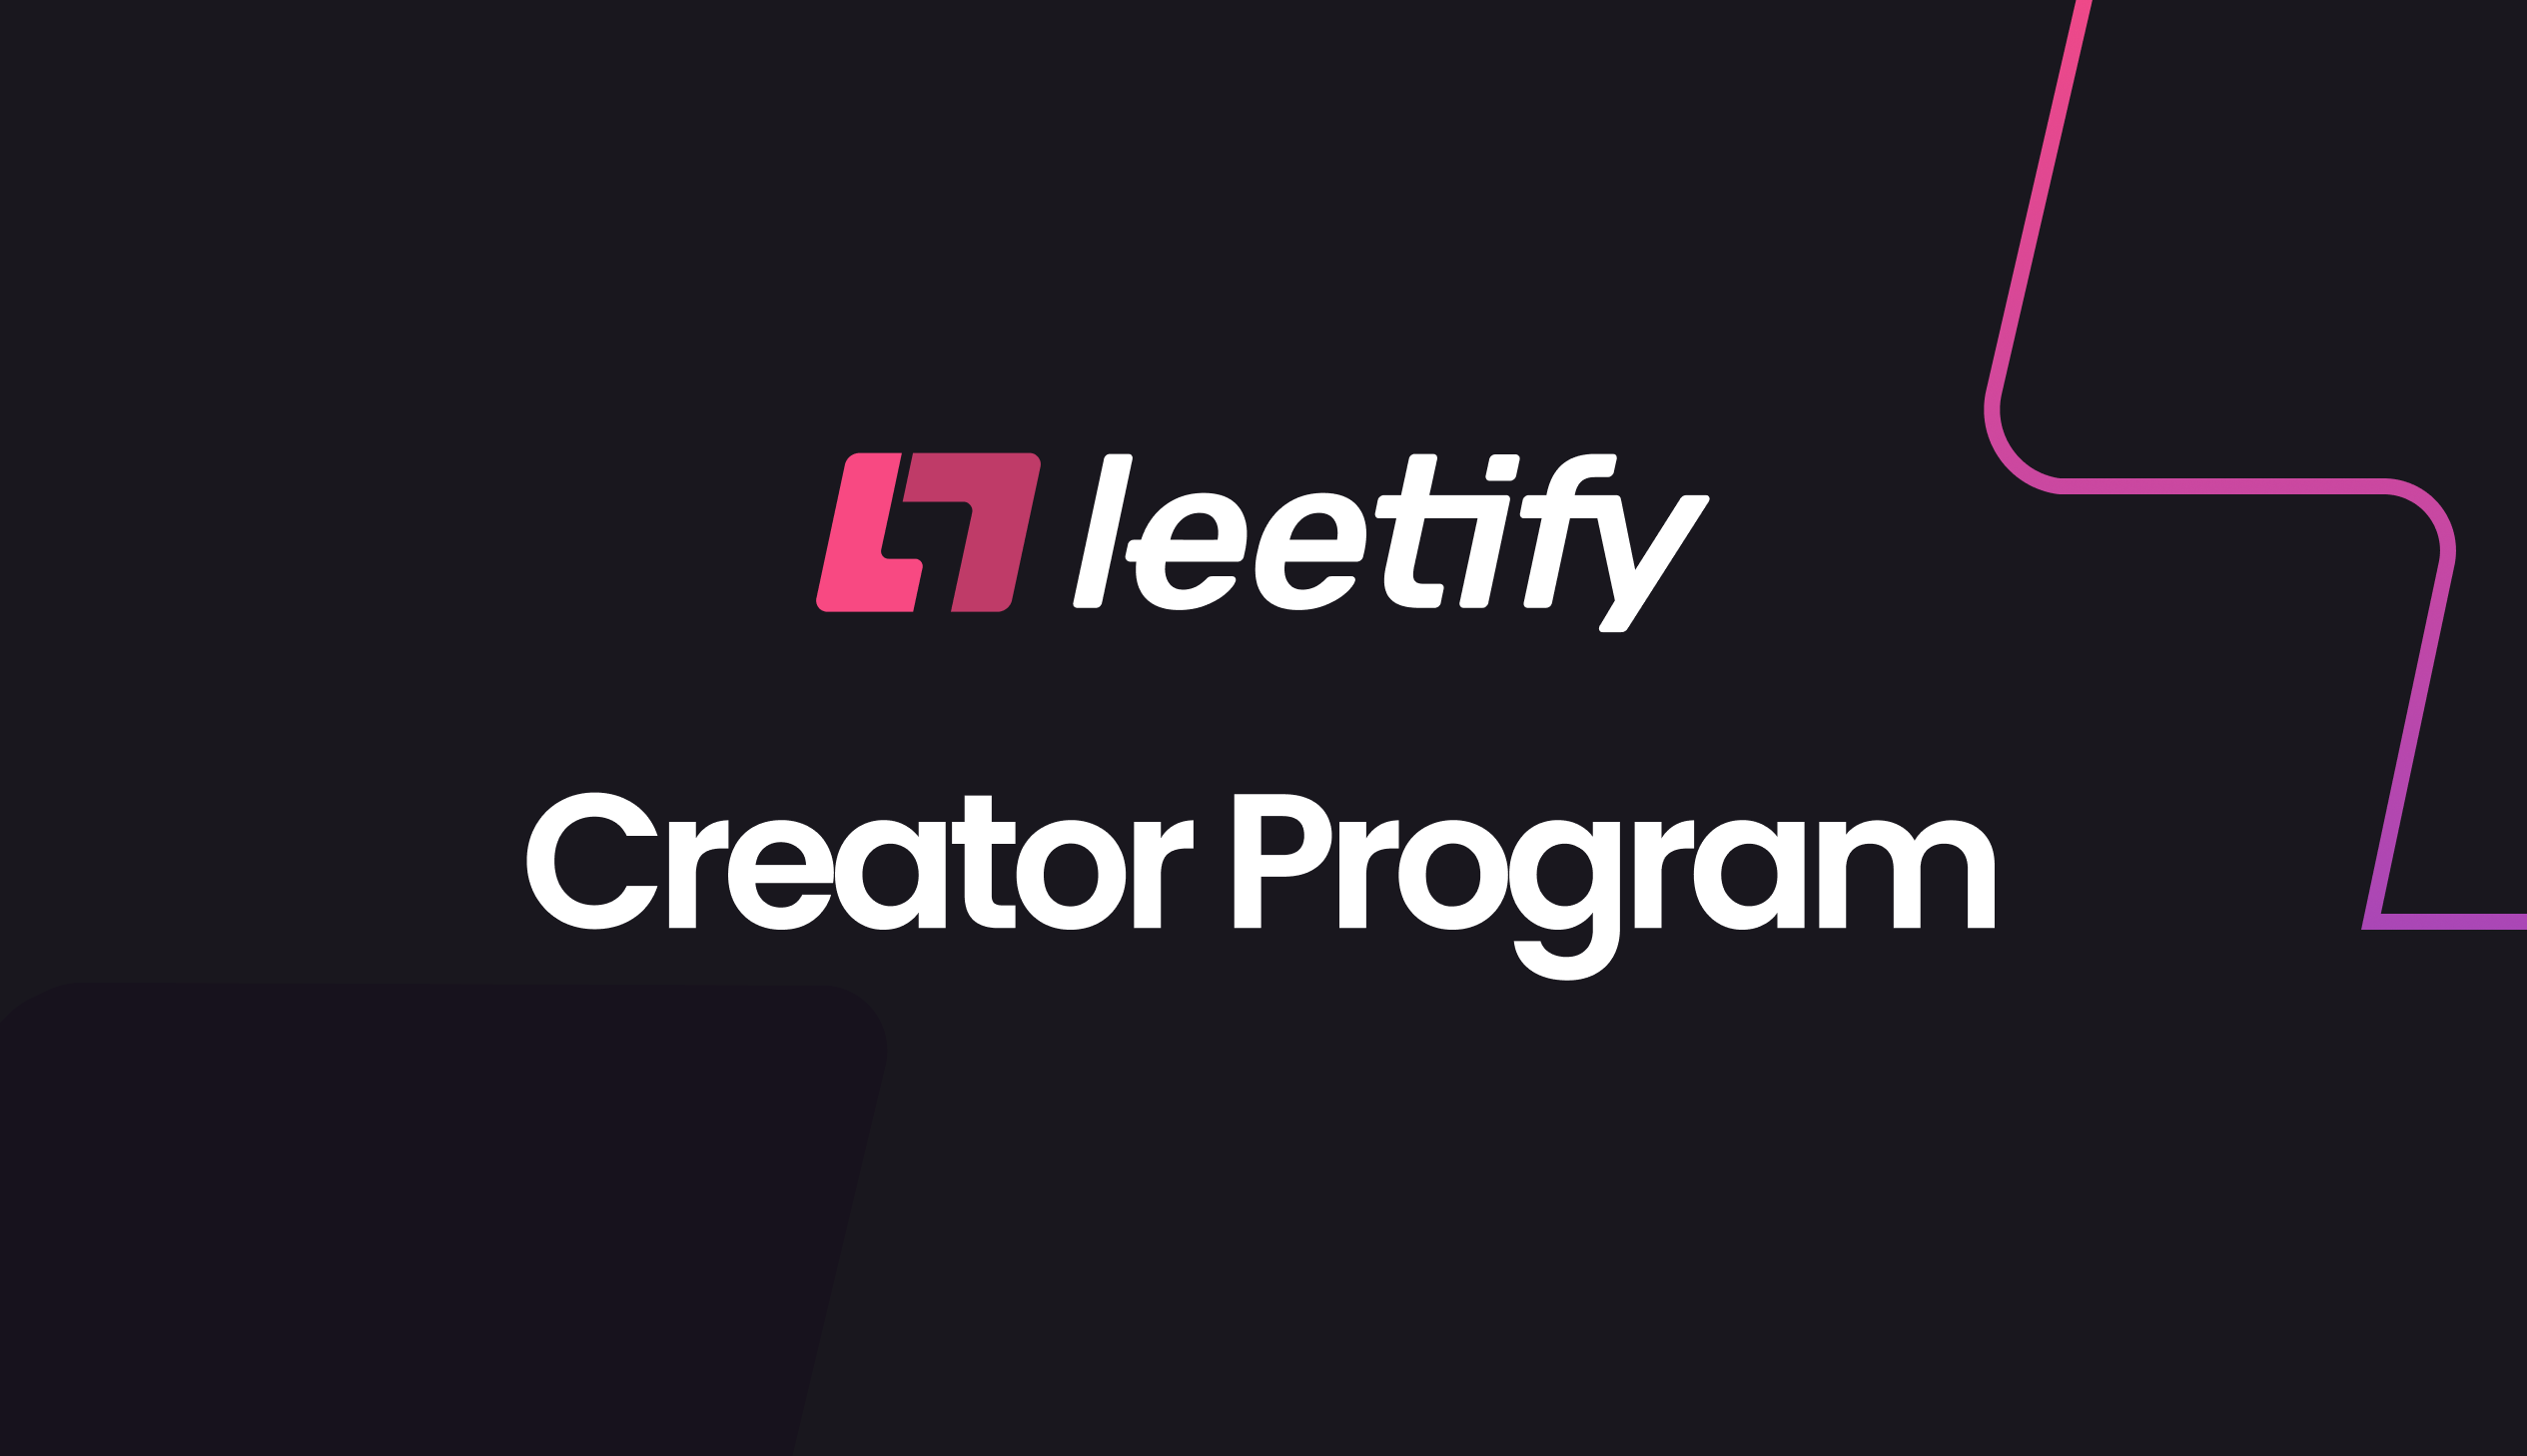 The Leetify Creator Program